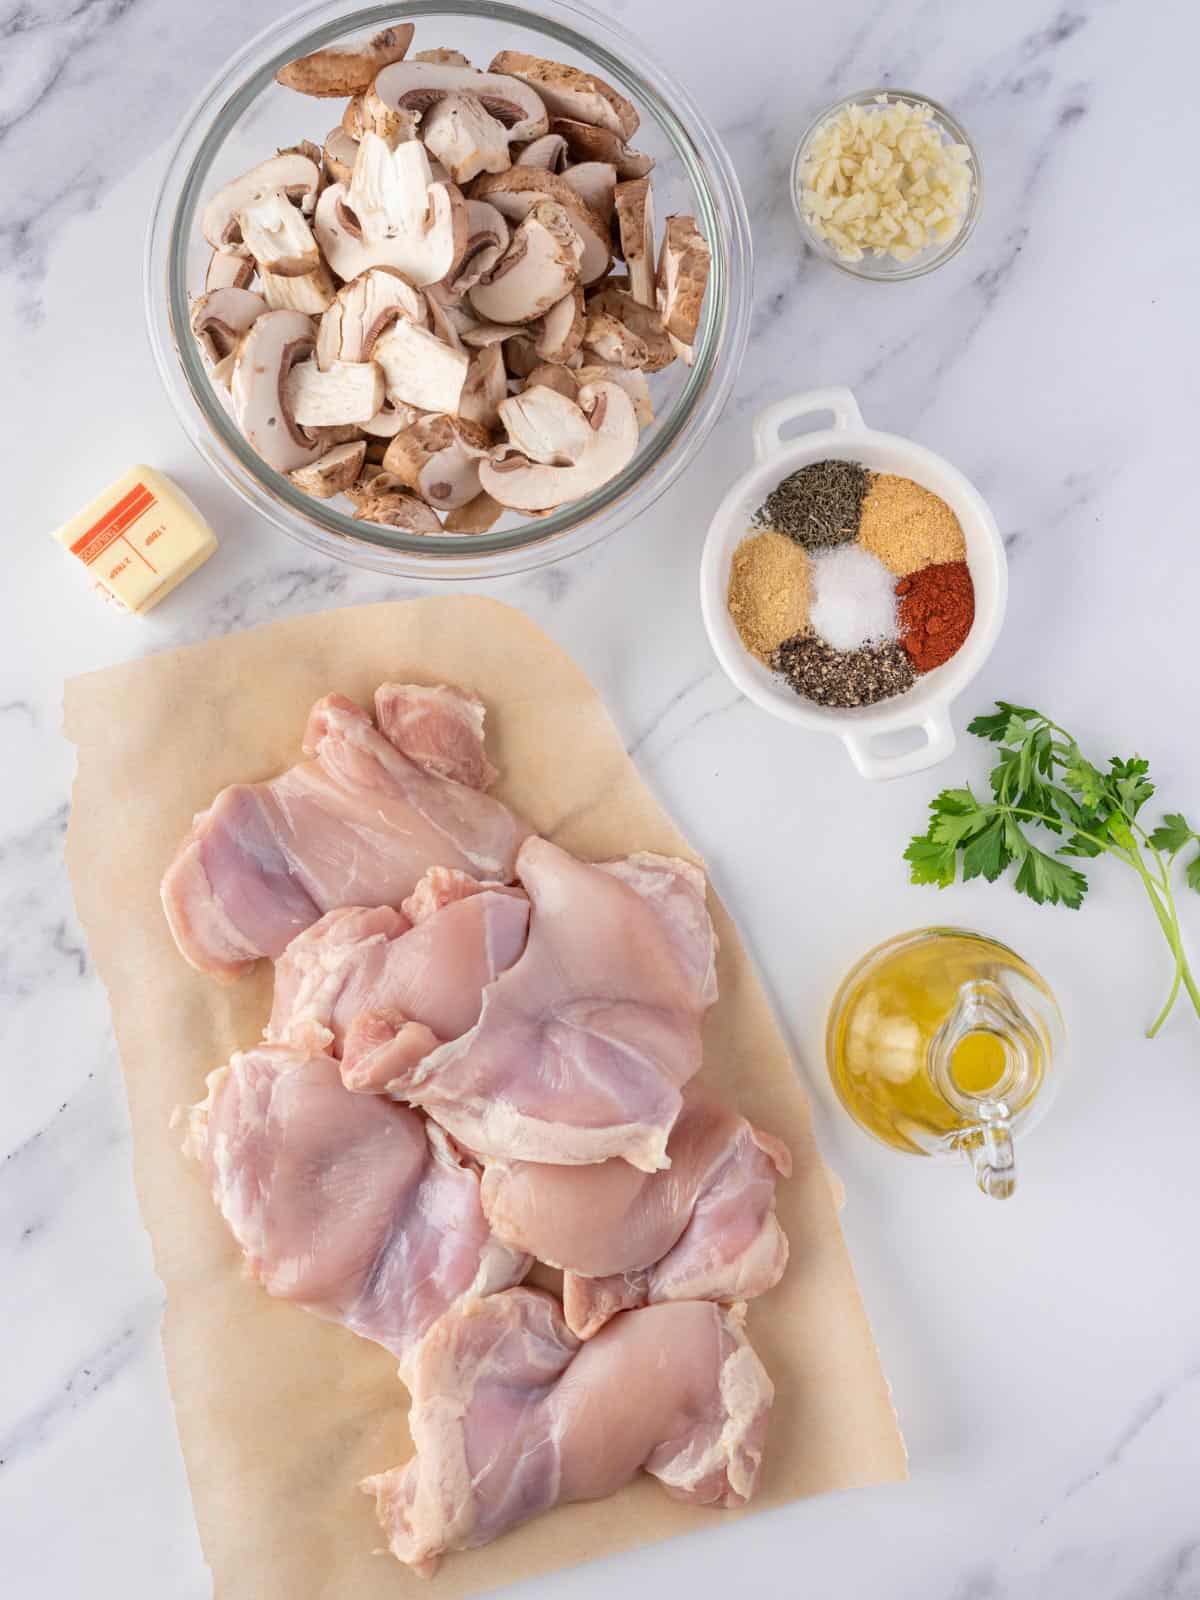 Ingredients to make garlic mushroom chicken thighs.